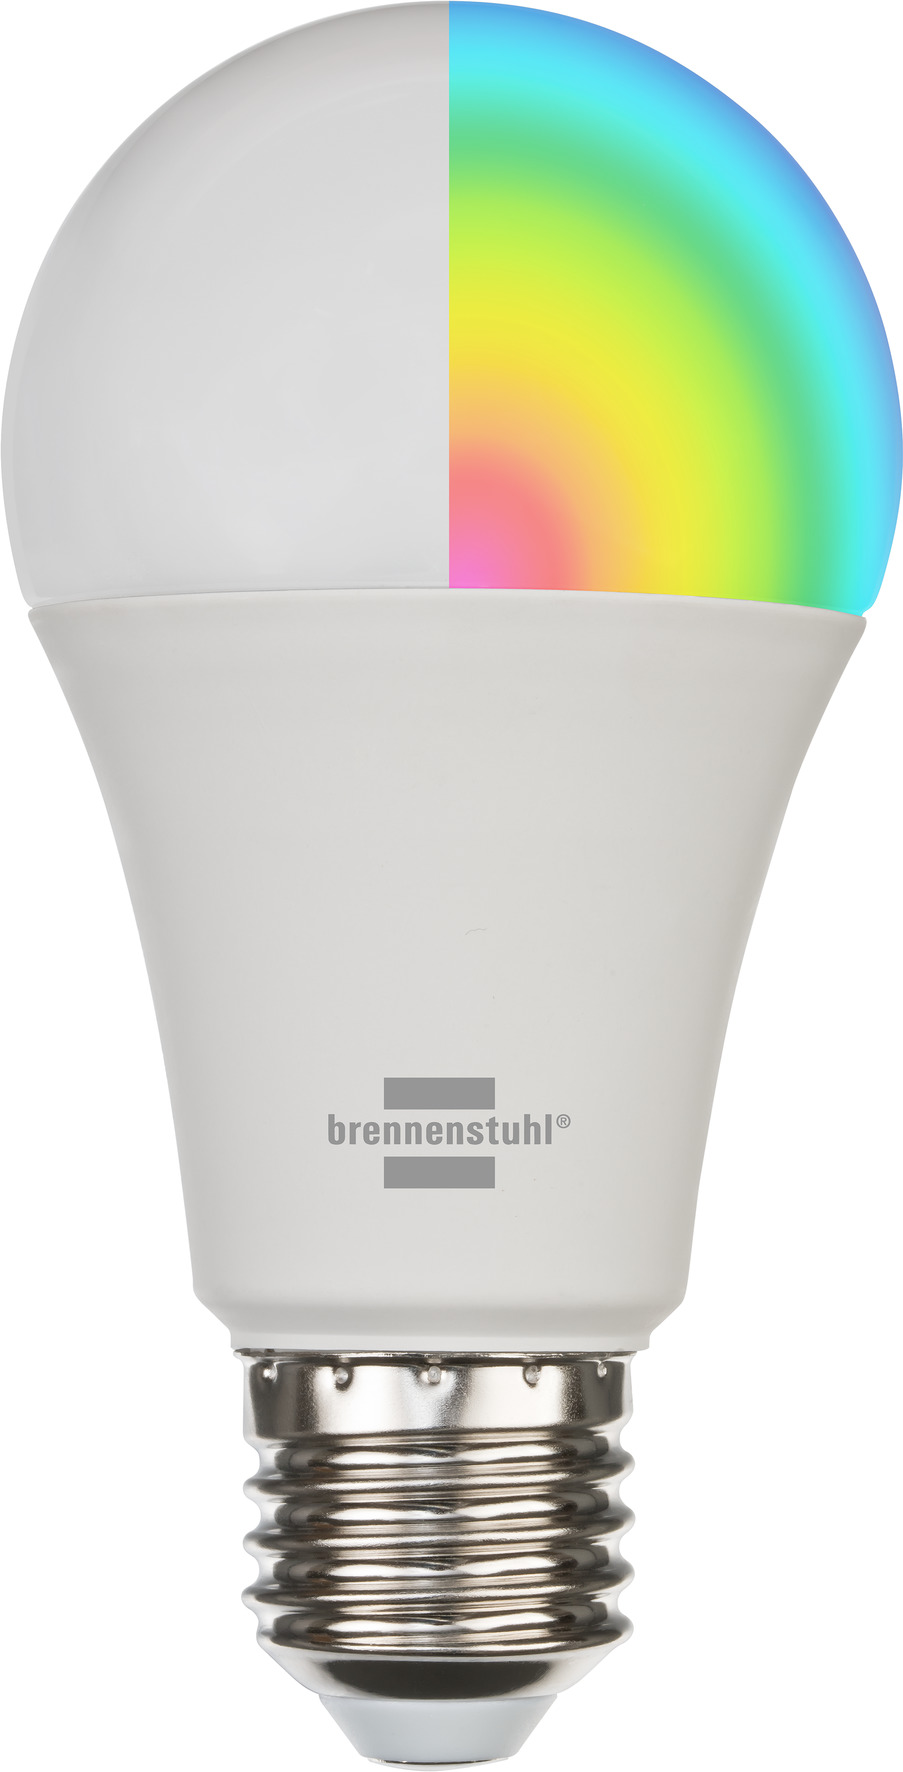 brennenstuhl®Connect WiFi bulb SB 800, E27, 860lm, 9W